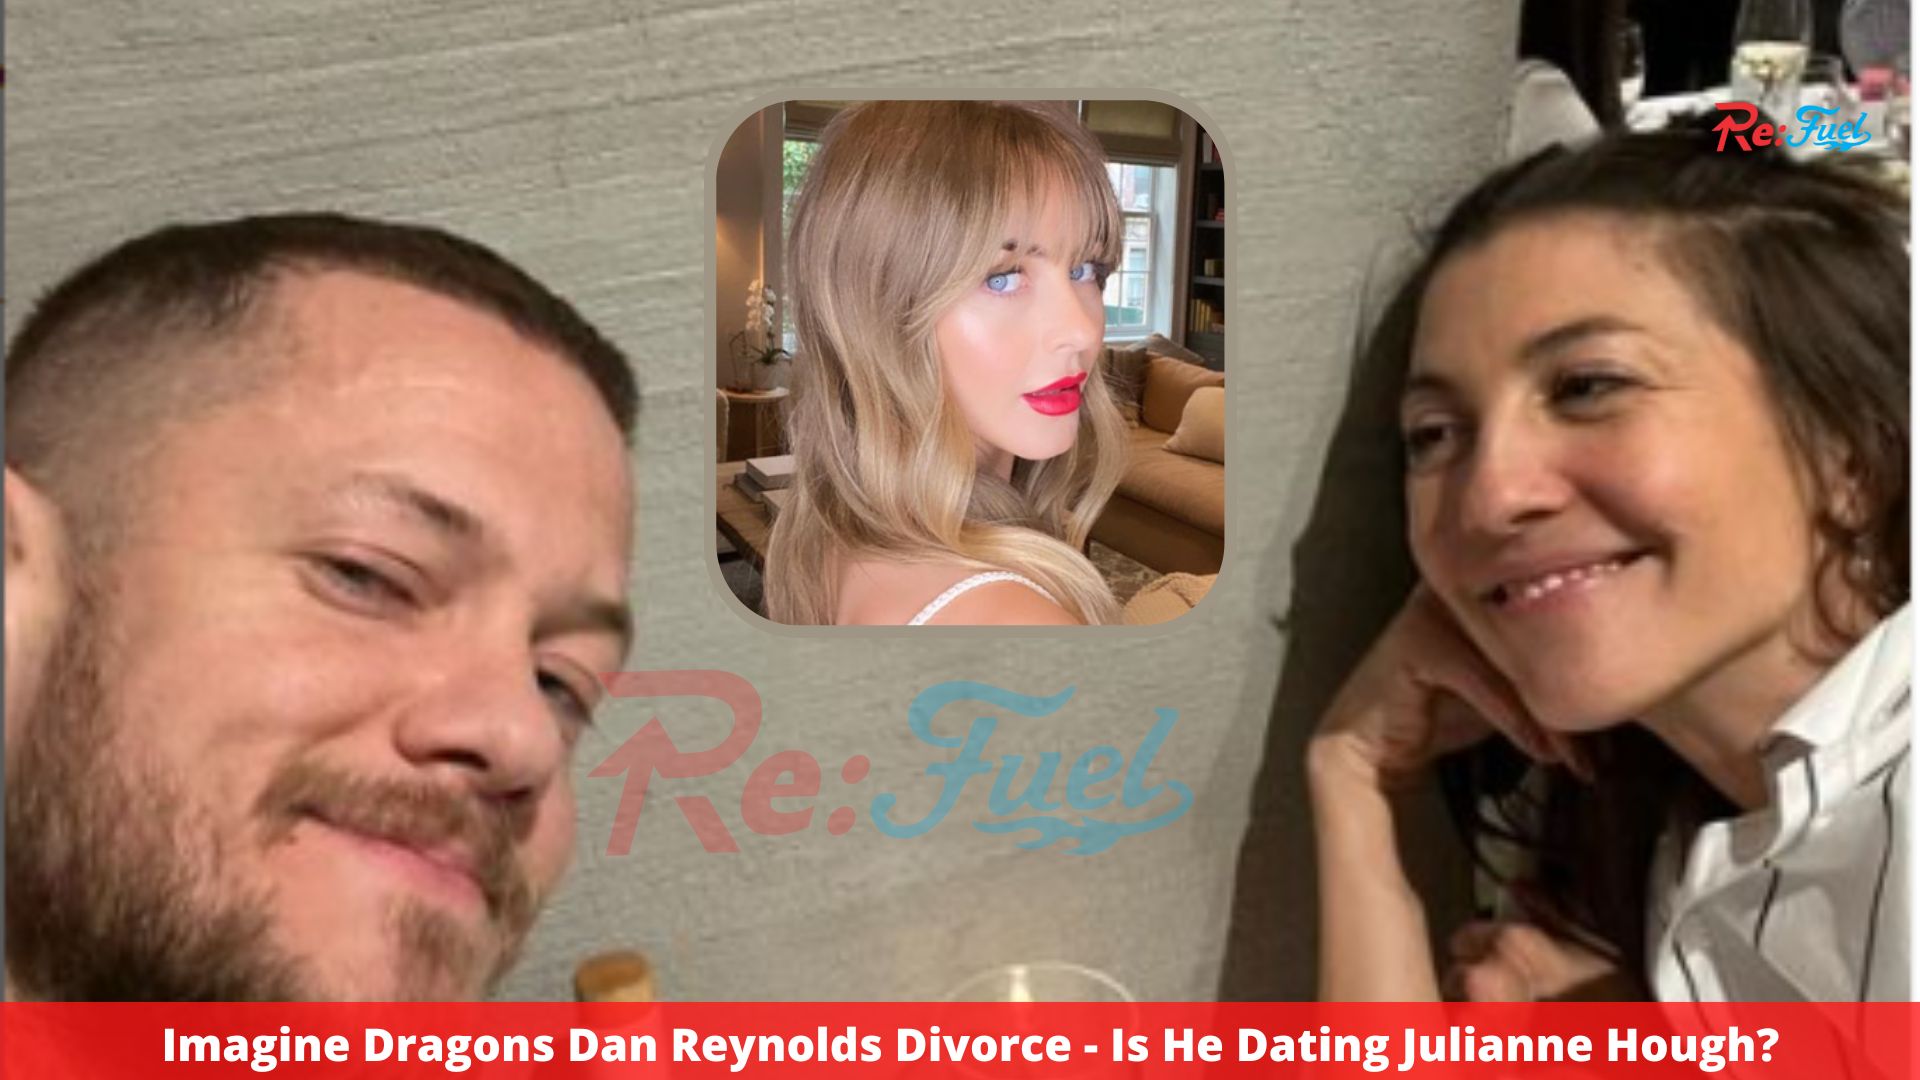 Imagine Dragons Dan Reynolds Divorce - Is He Dating Julianne Hough?